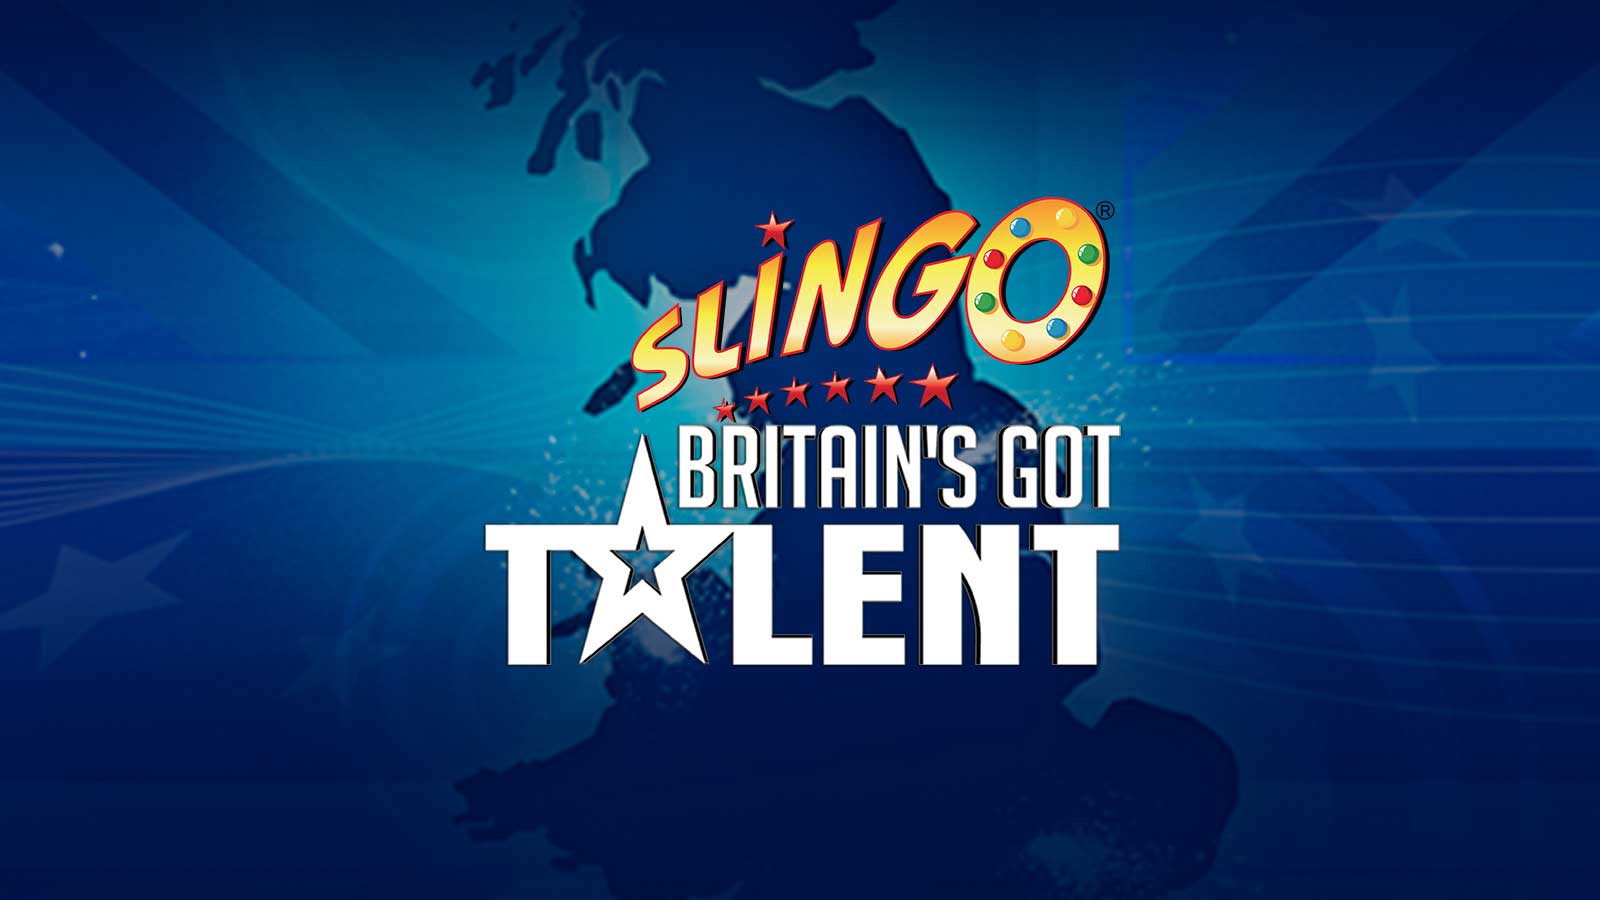 foxb-0803-slingo-britains-got-talent-main-teaser-1600x900